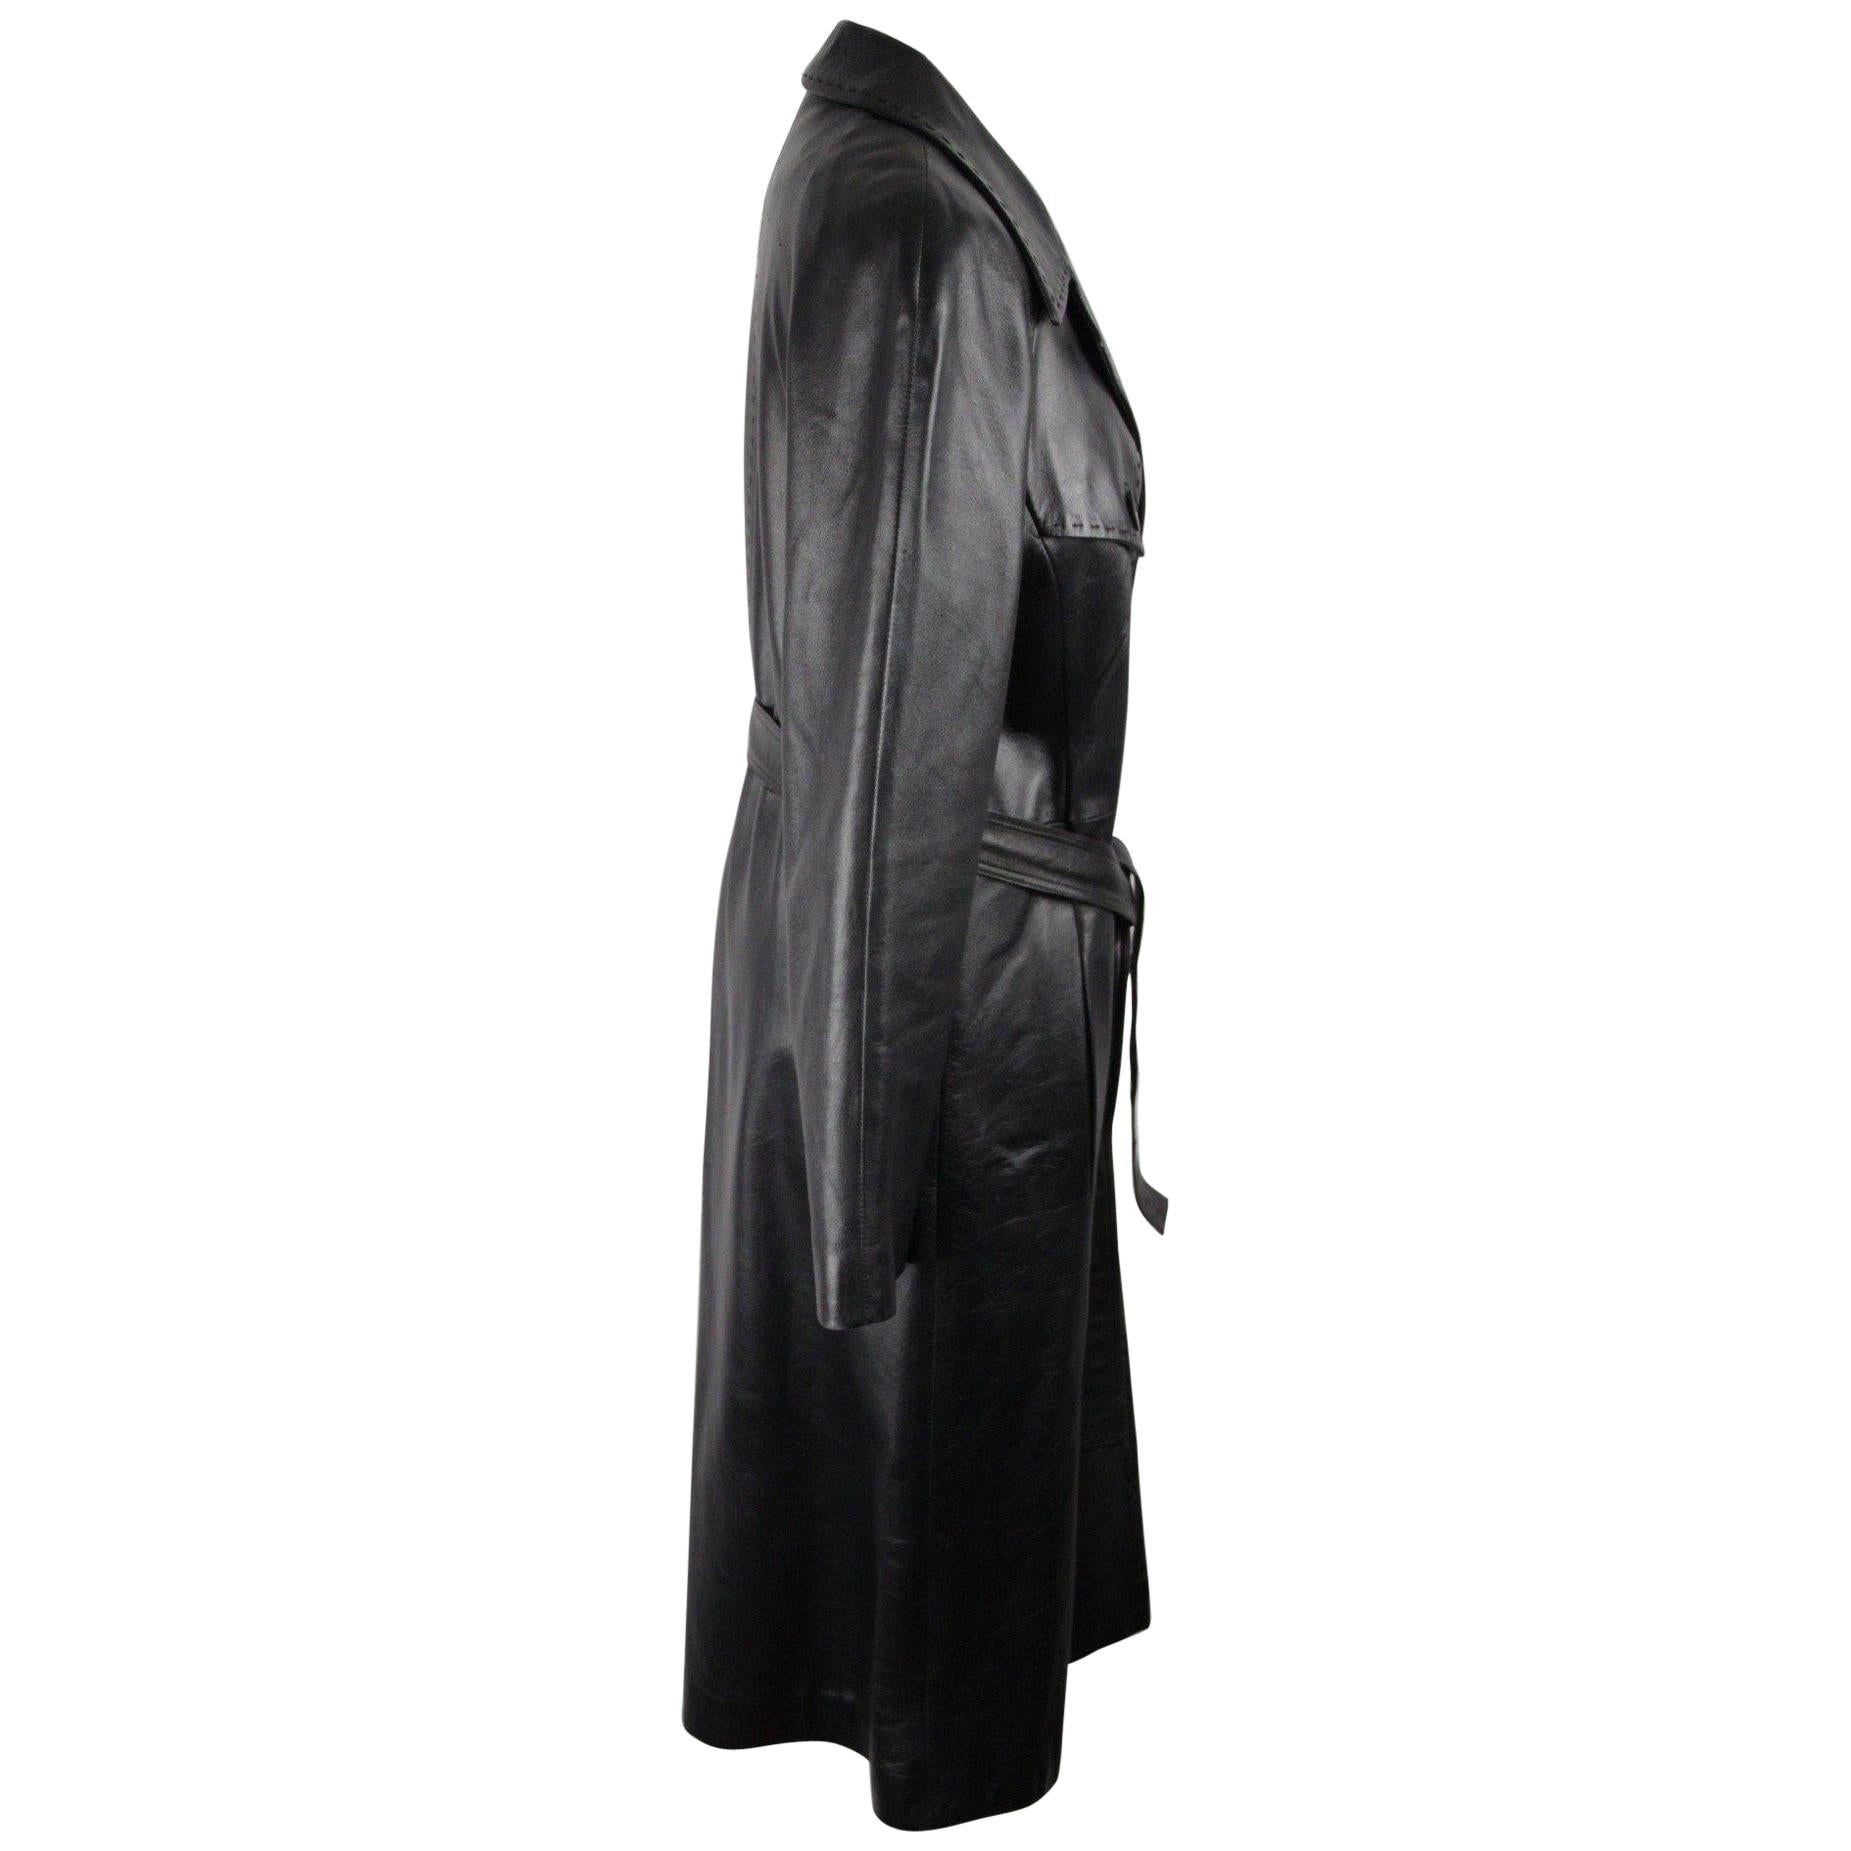 AMINA RUBINACCI Black Leather TRENCH COAT Long Lenght w/ BELT Size 42